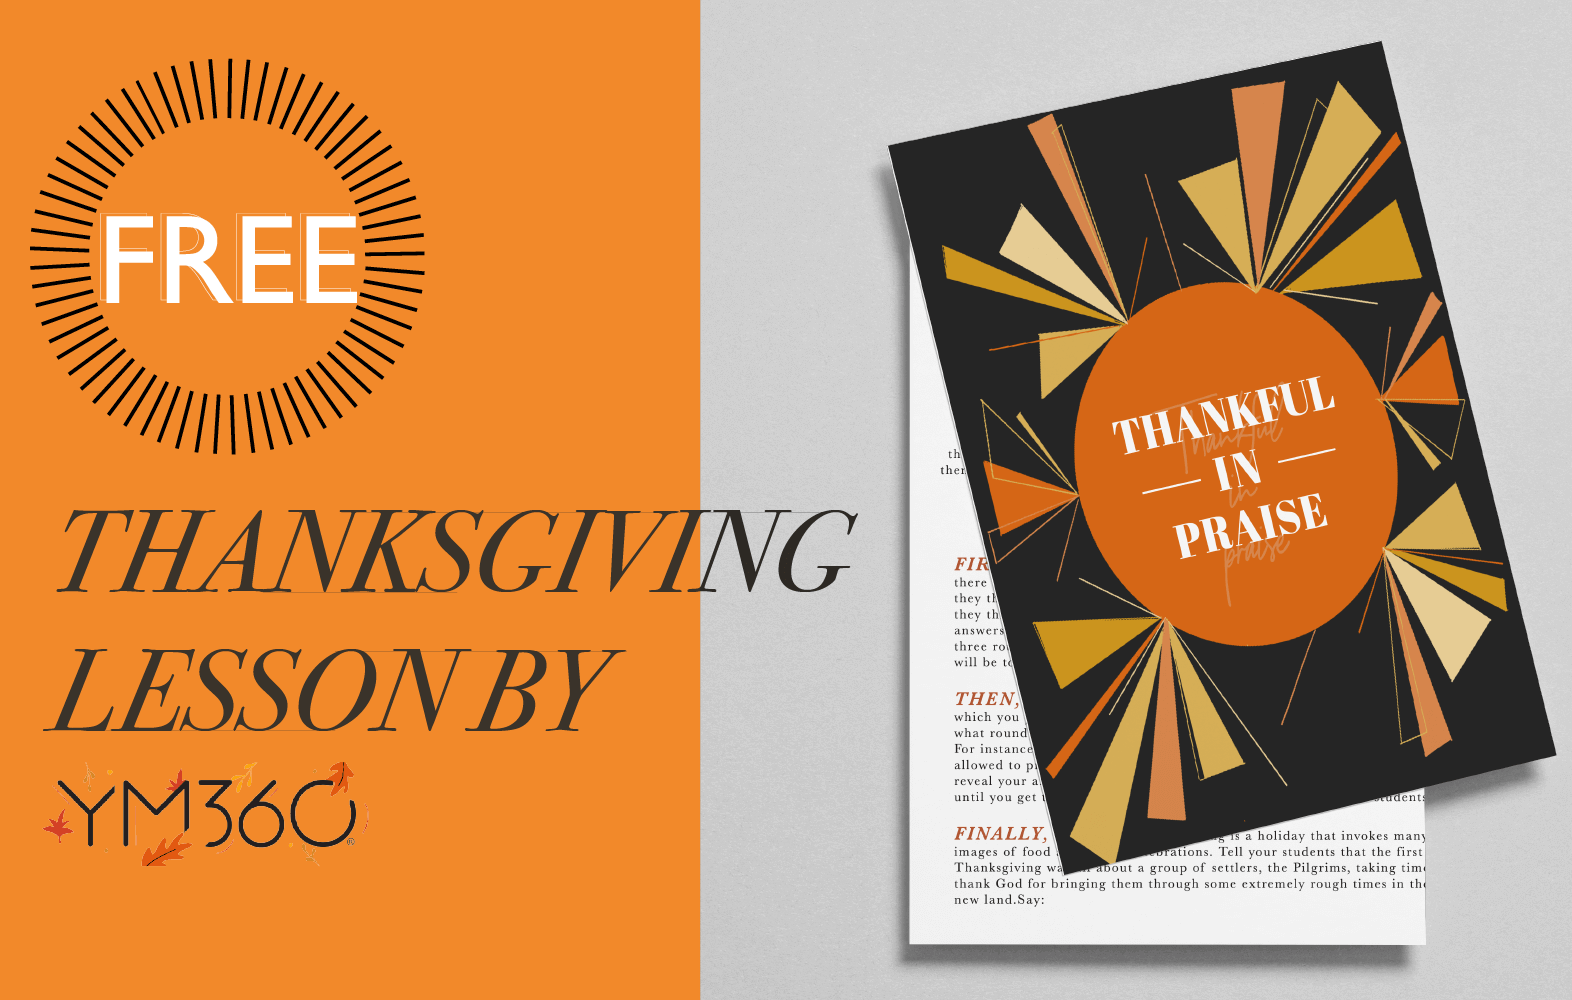 Free Thanksgiving Lesson | Thankful in Praise